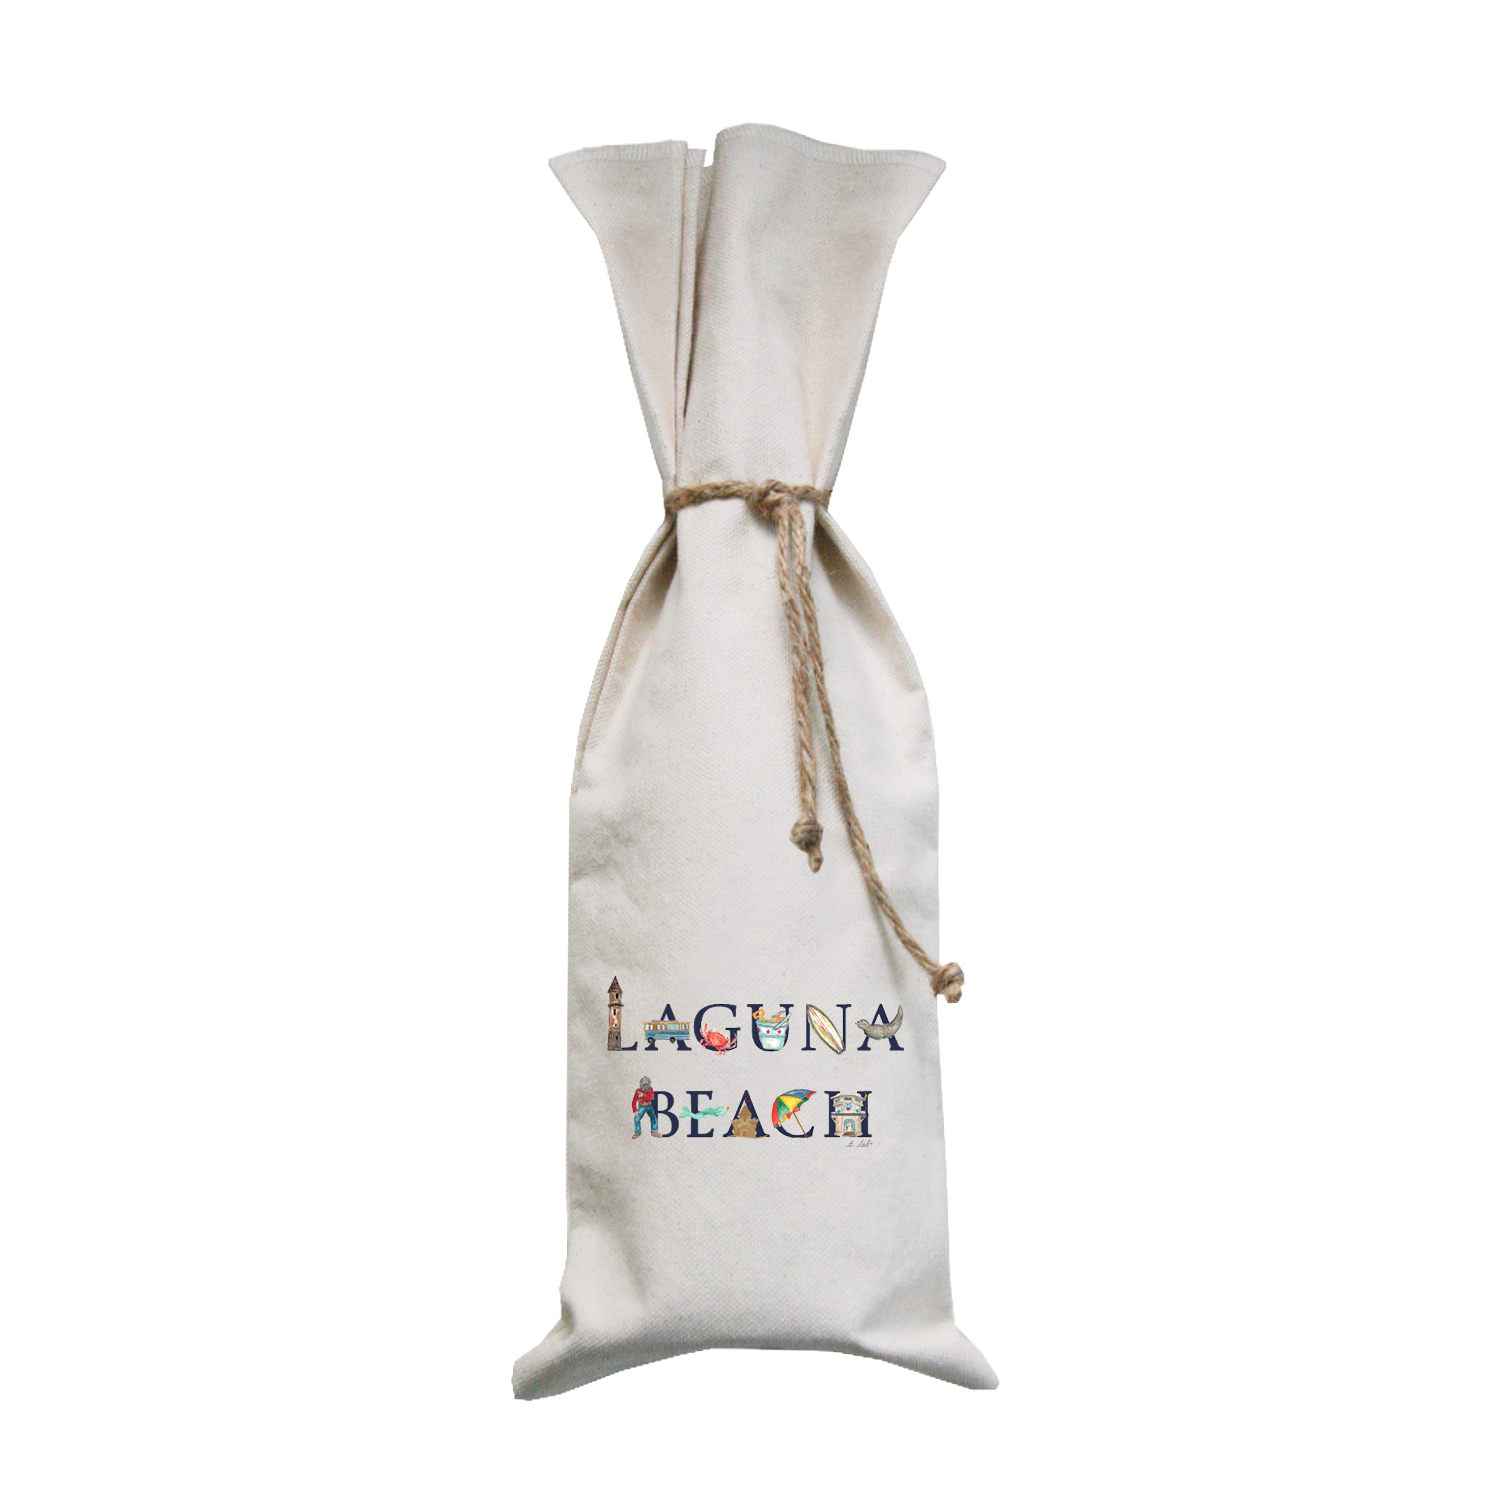 laguna beach wine bag